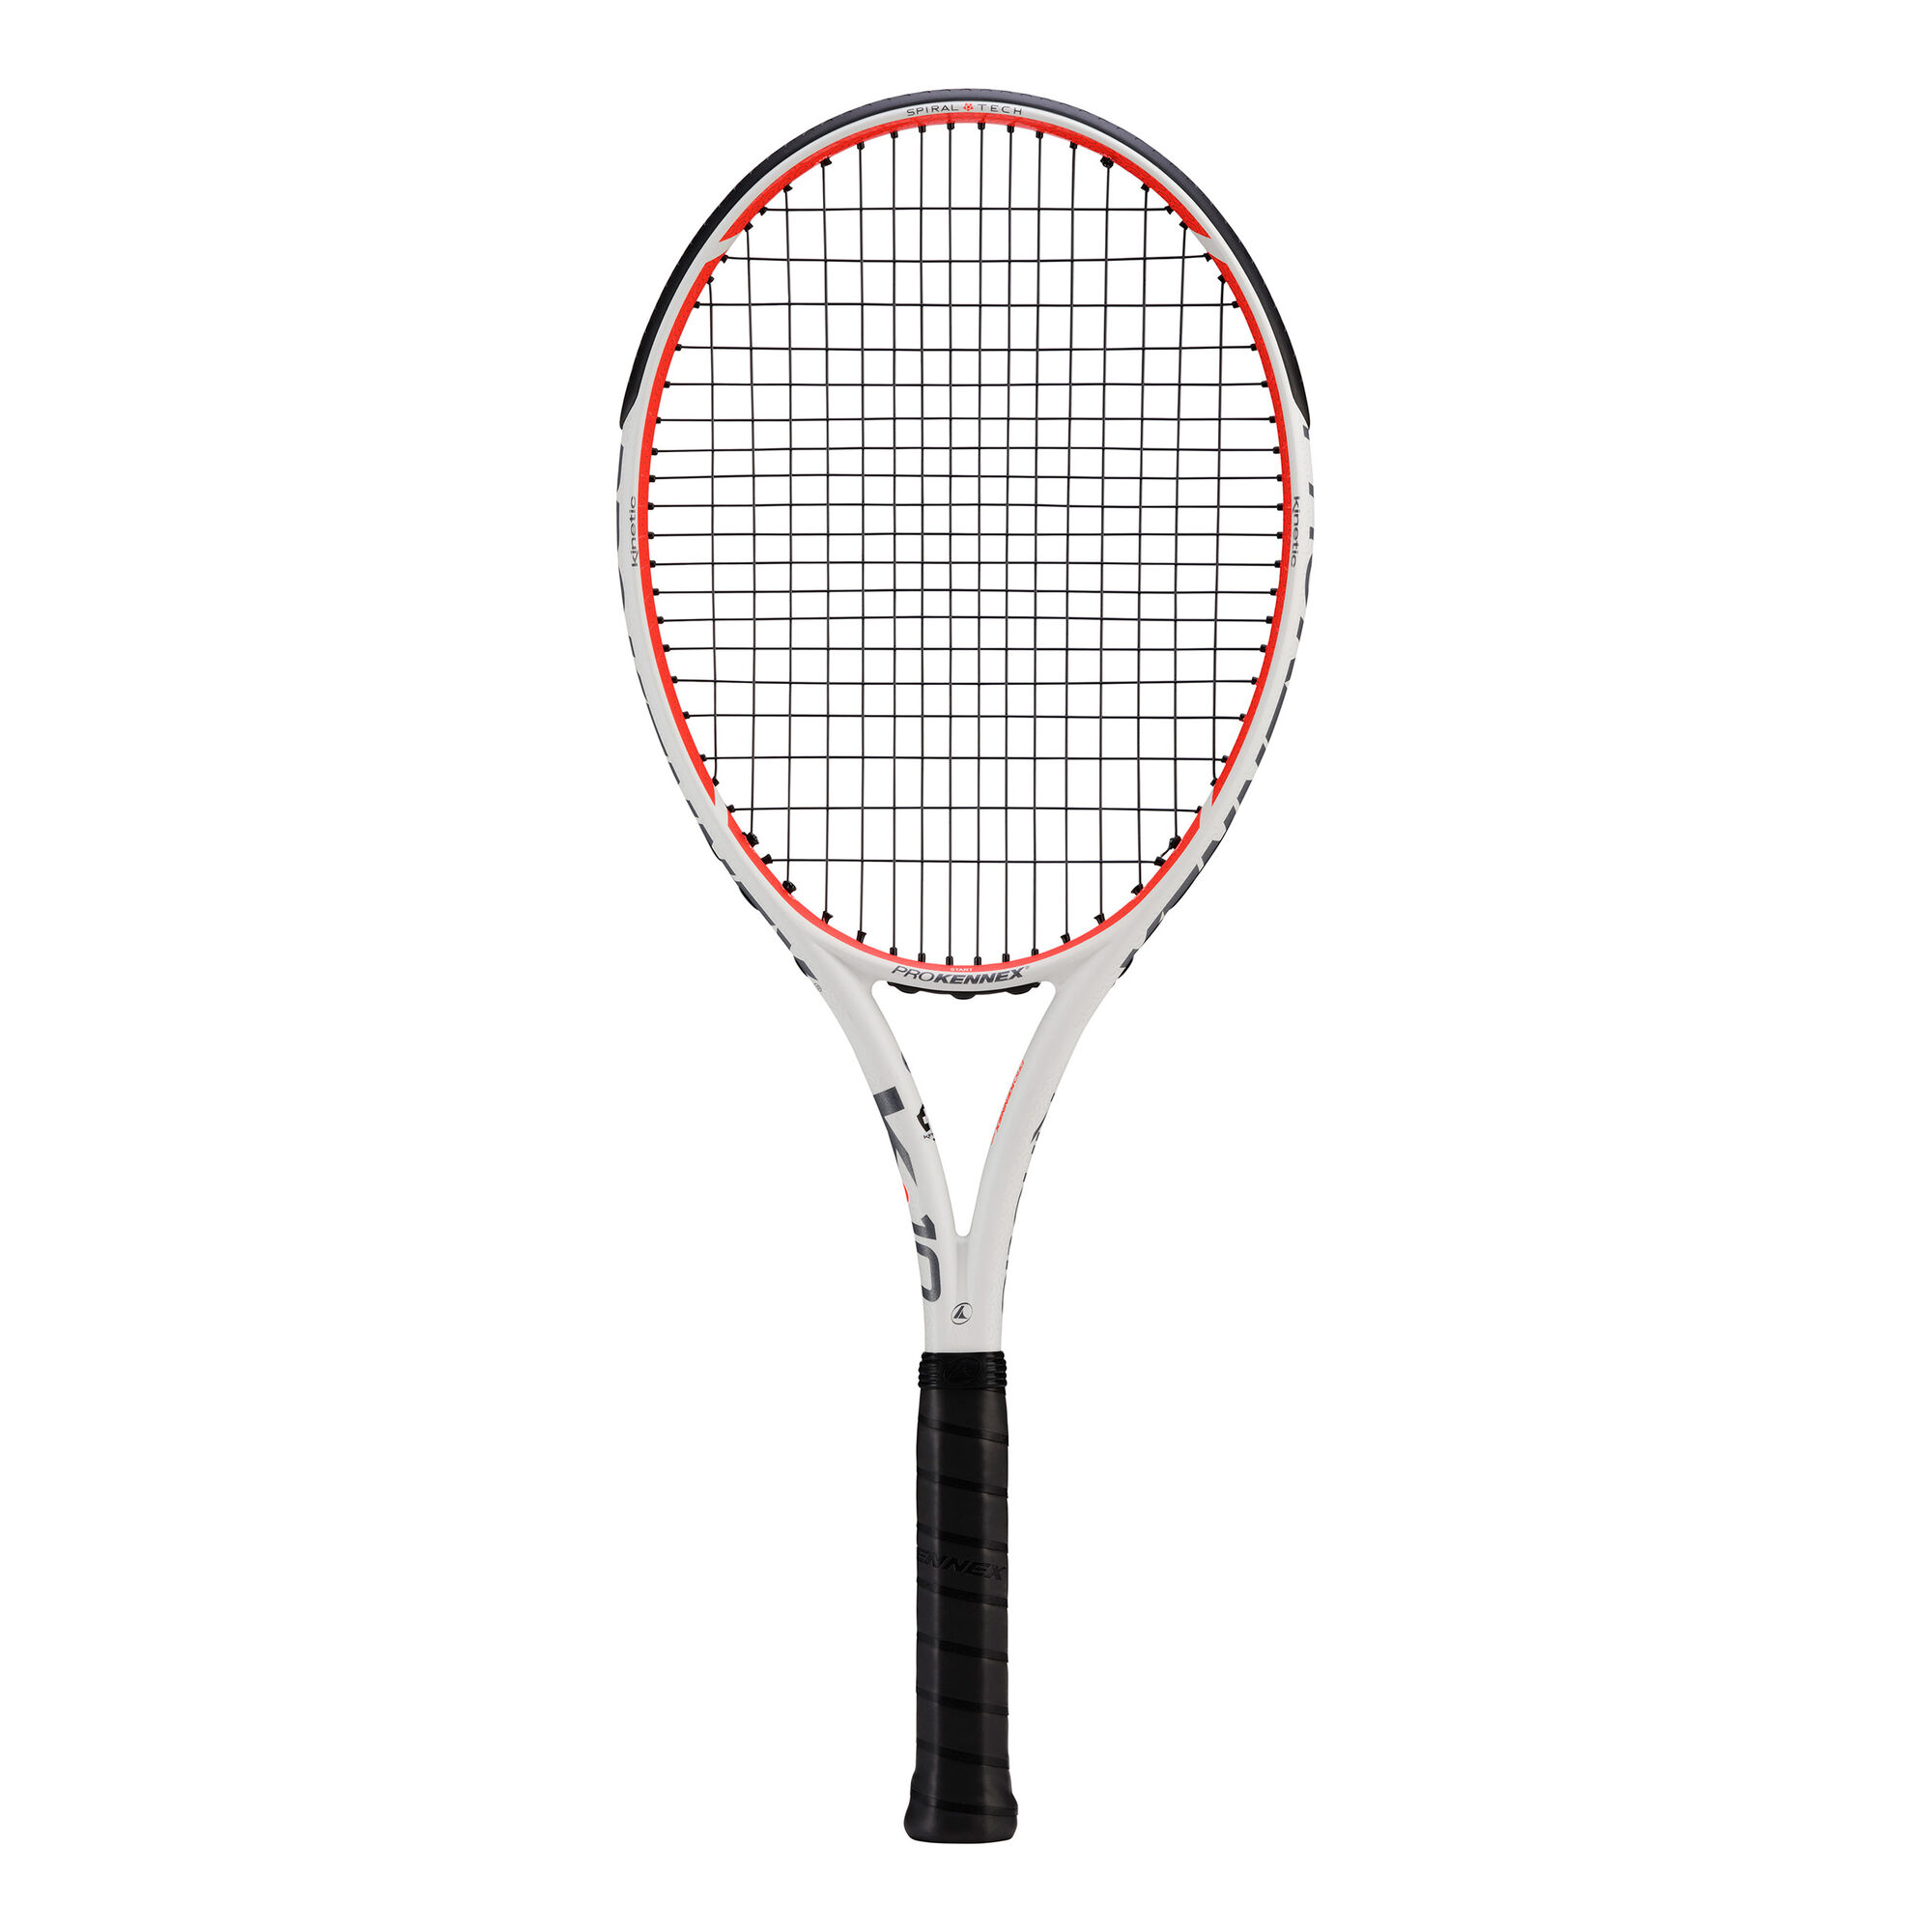 Buy (305g) Tennis 10 Point Kinetic PROKENNEX | online COM